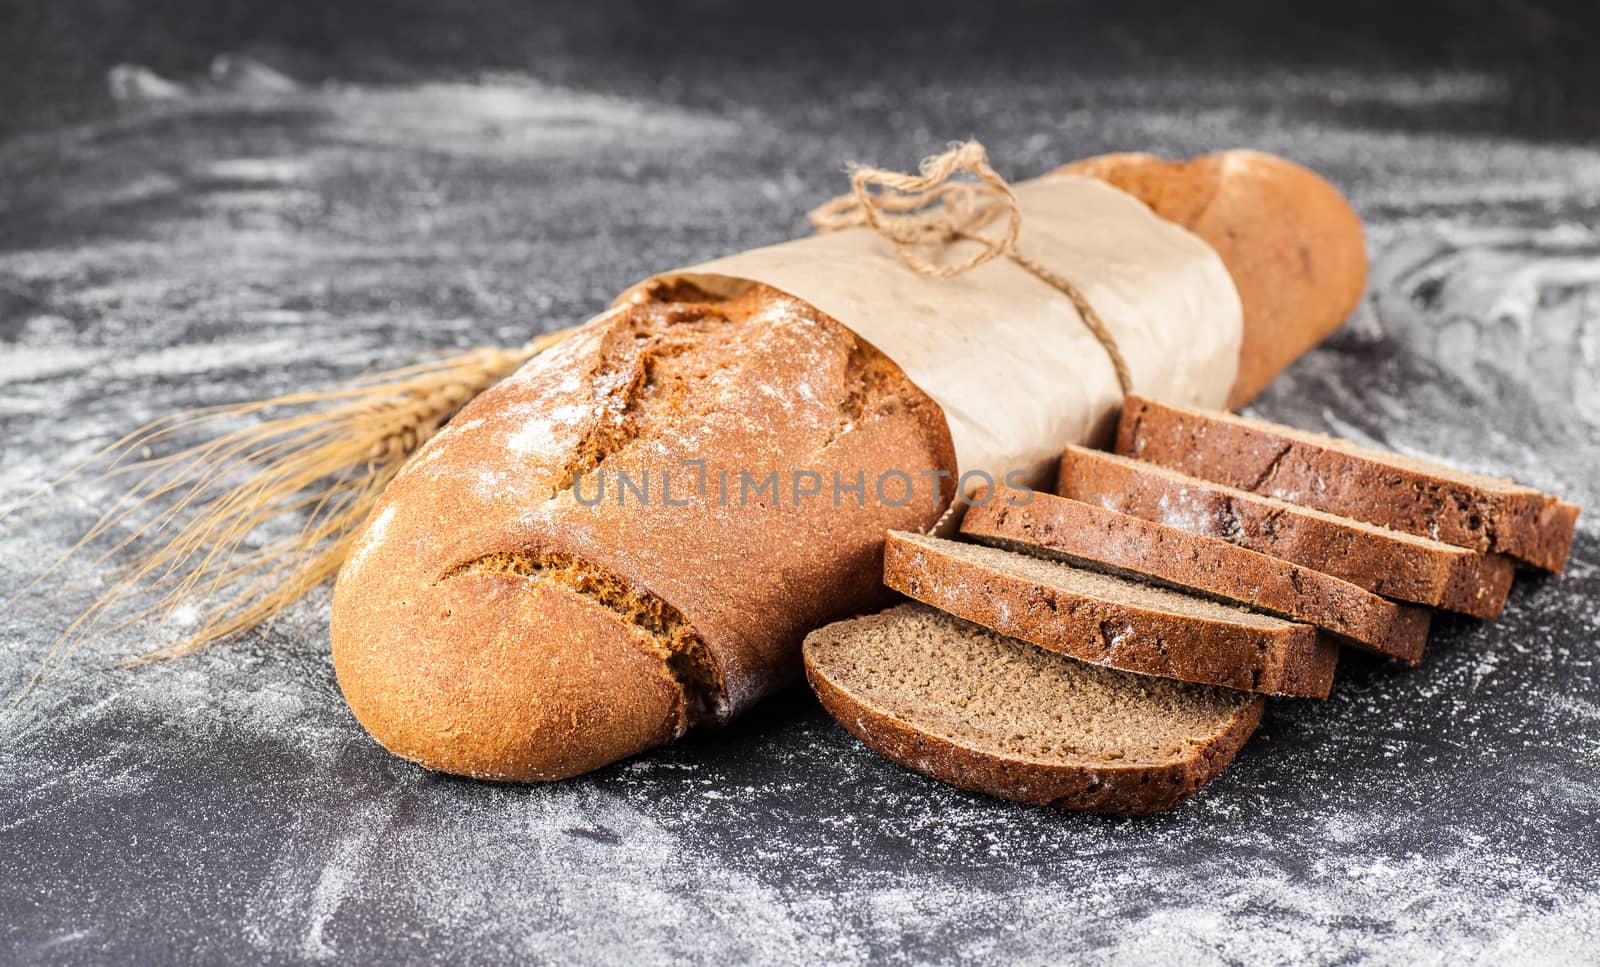  sliced bread on a dark background with flour